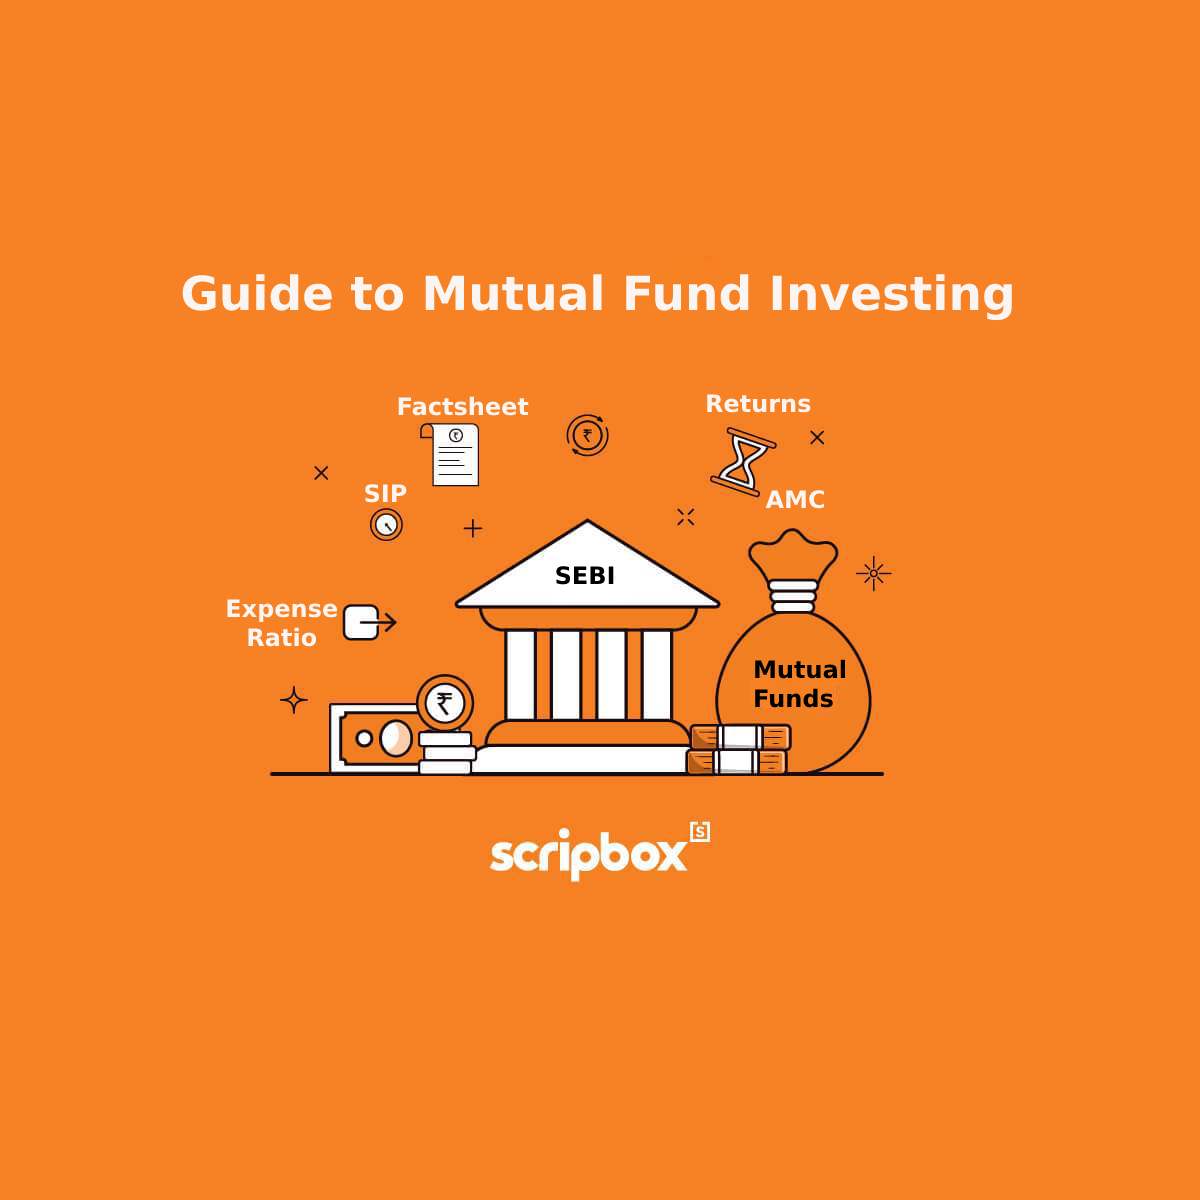 micro-sip-in-mutual-funds